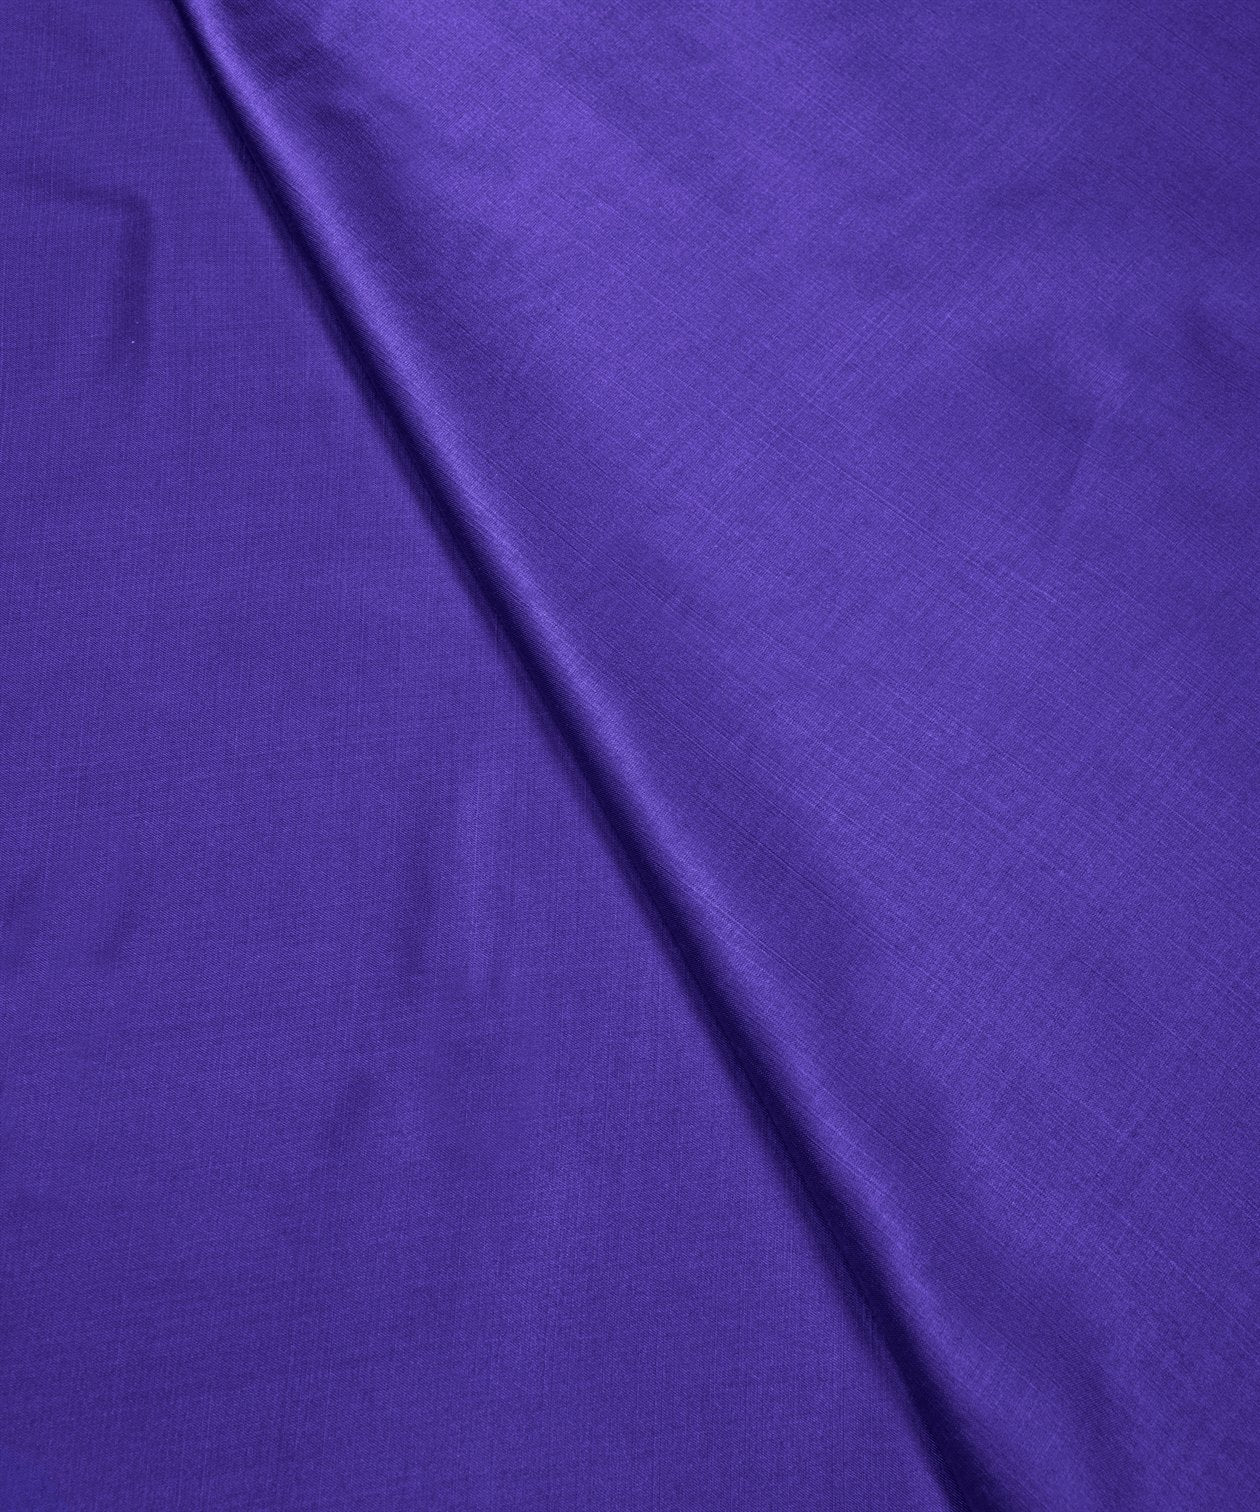 Violet Plain Dyed Modal Satin Fabric